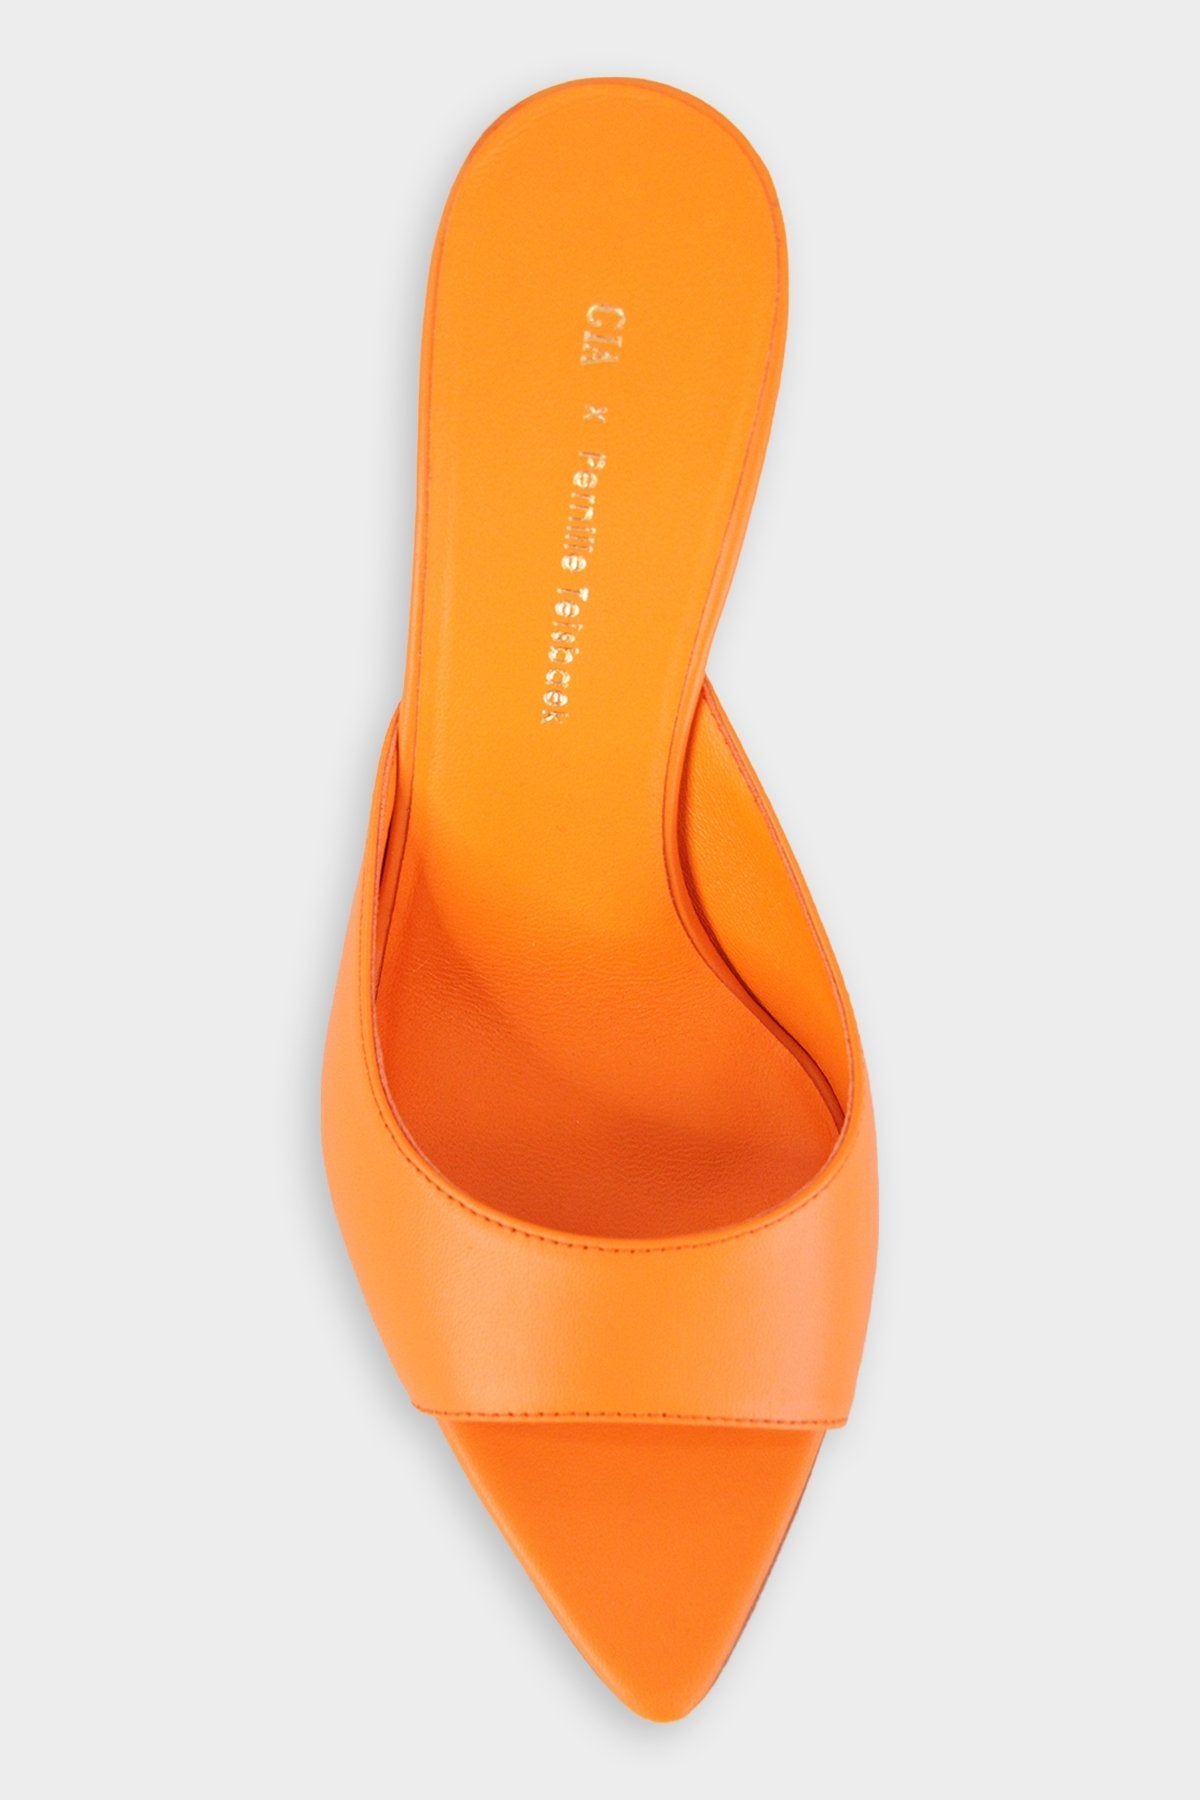 Perni Pointed Toe Mule in Flash Orange - shop-olivia.com